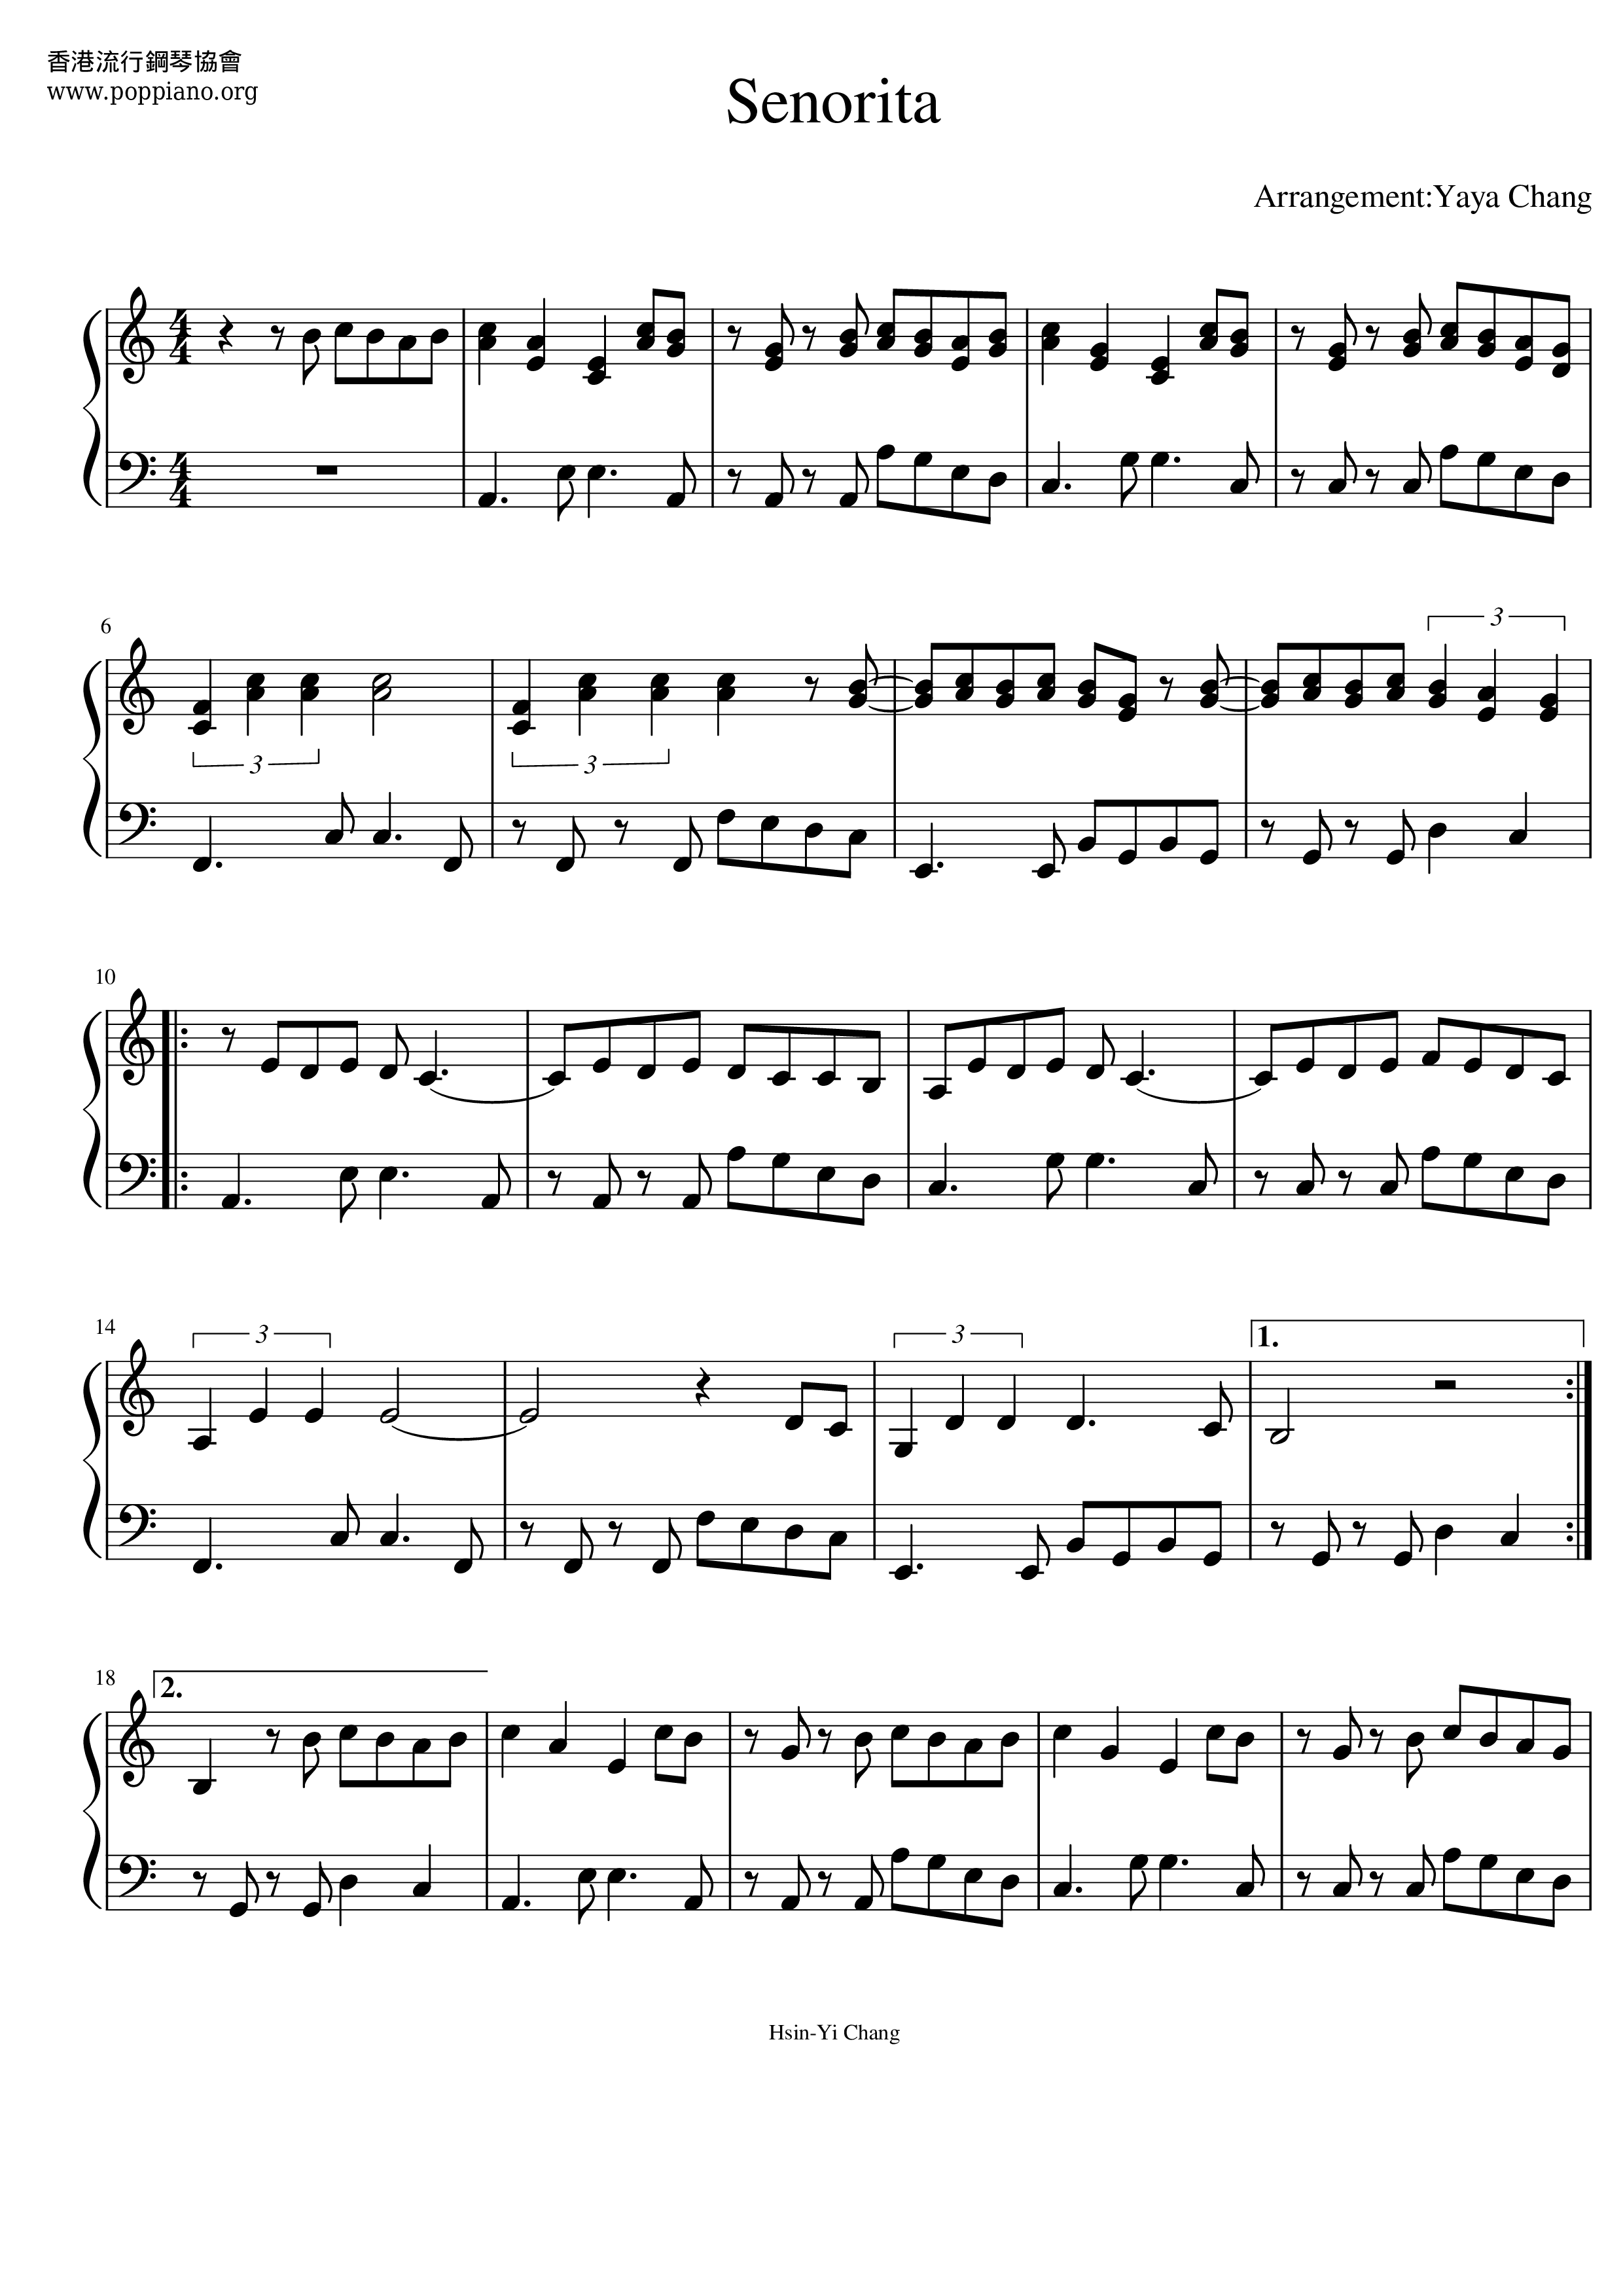 Senoritaピアノ譜